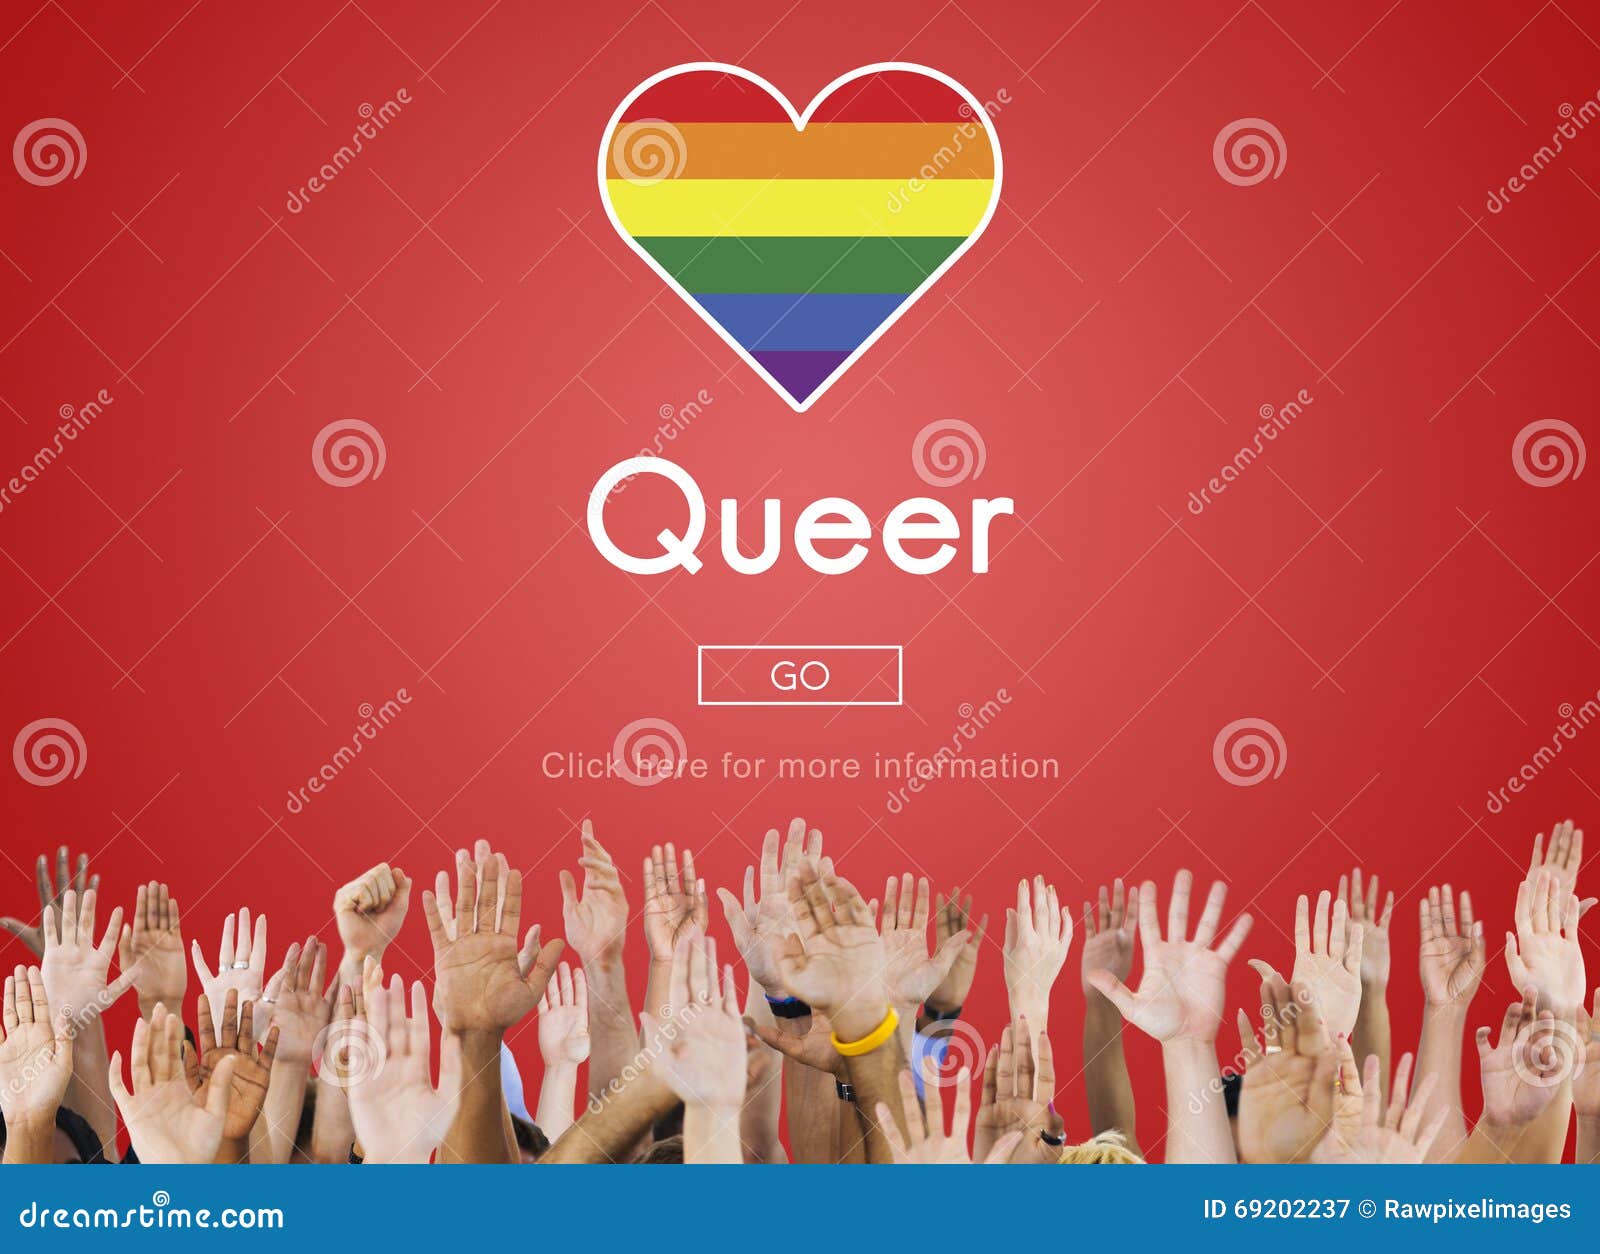 lgbt lesbian gay bisexual transgender concept